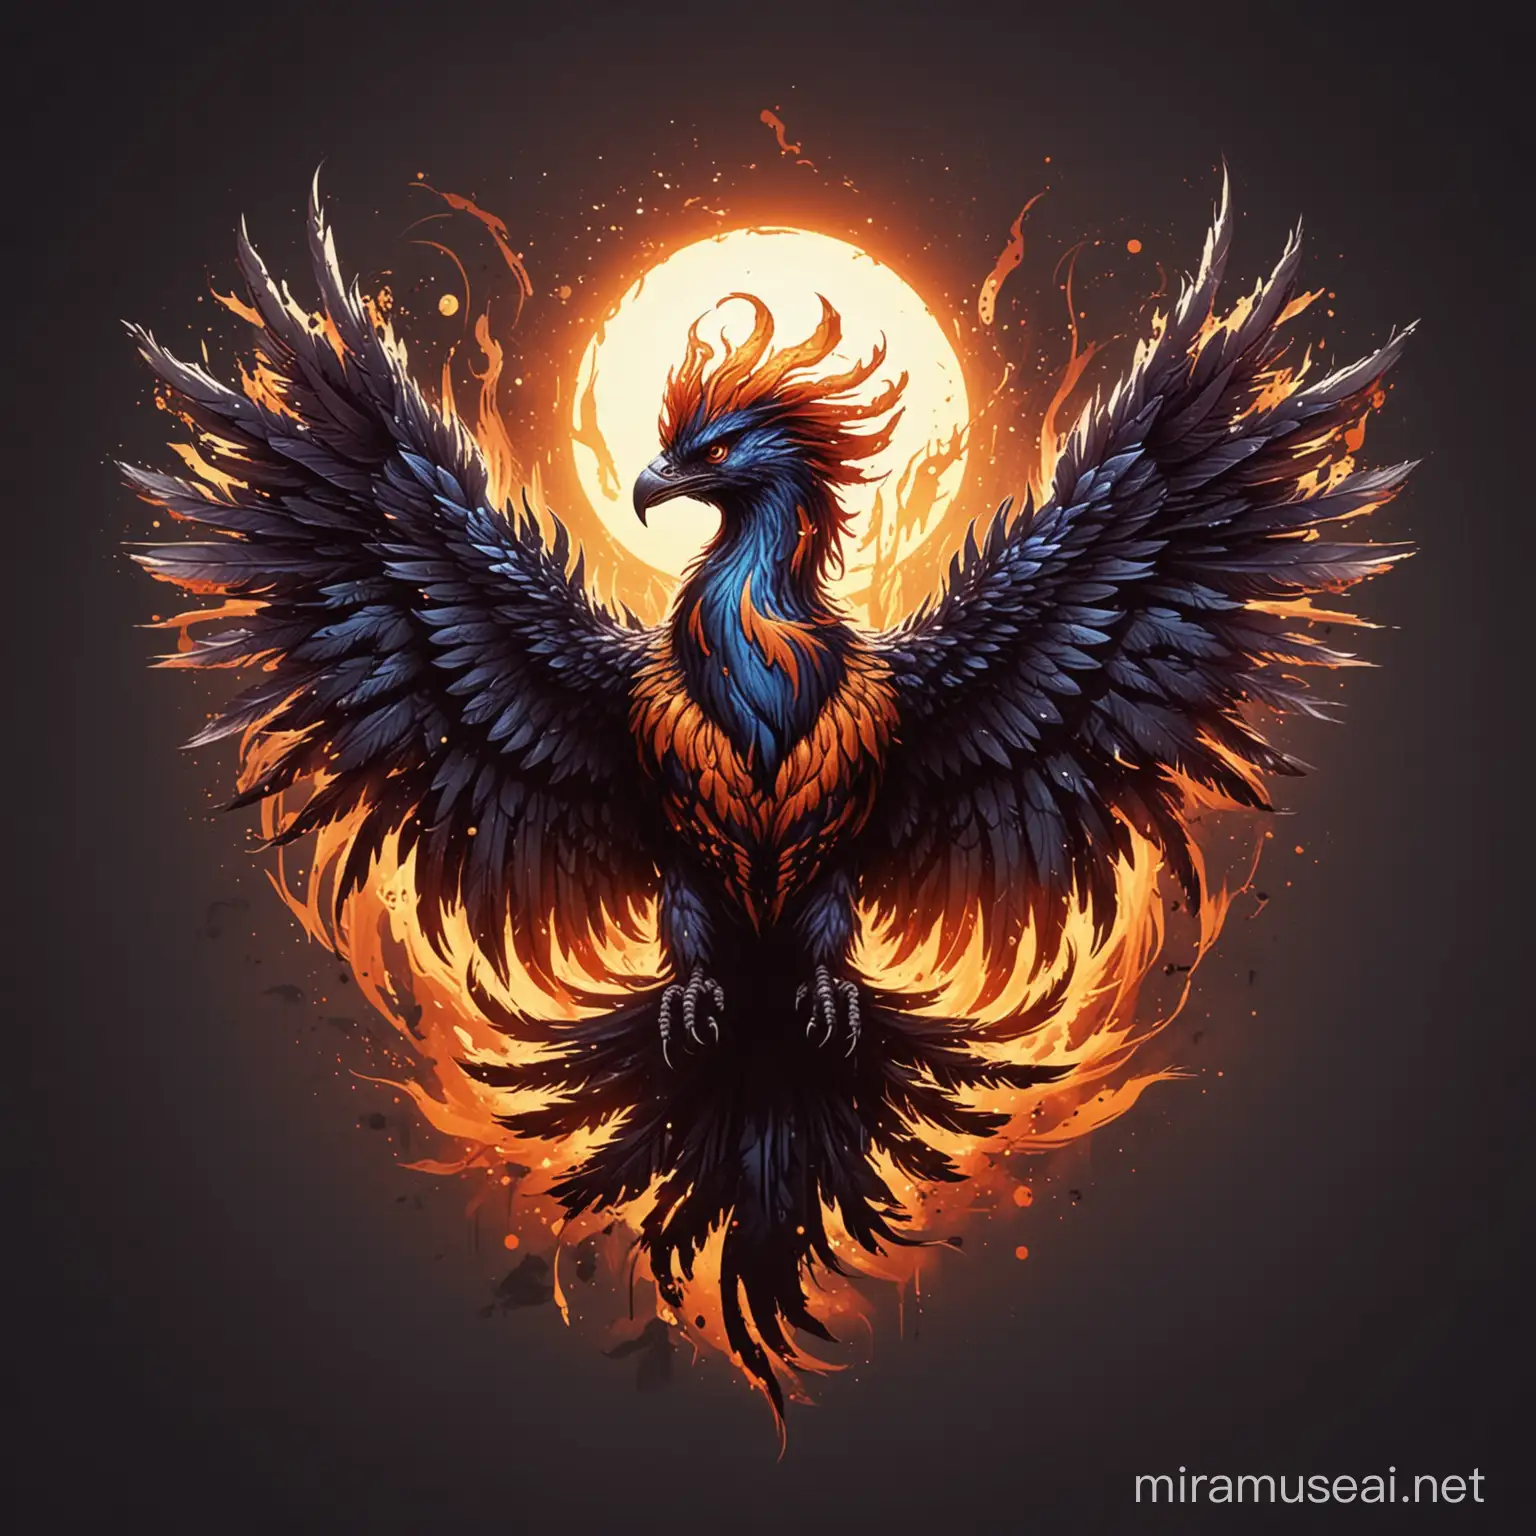 Vibrant Fantasy Phoenix Rising at Dawn